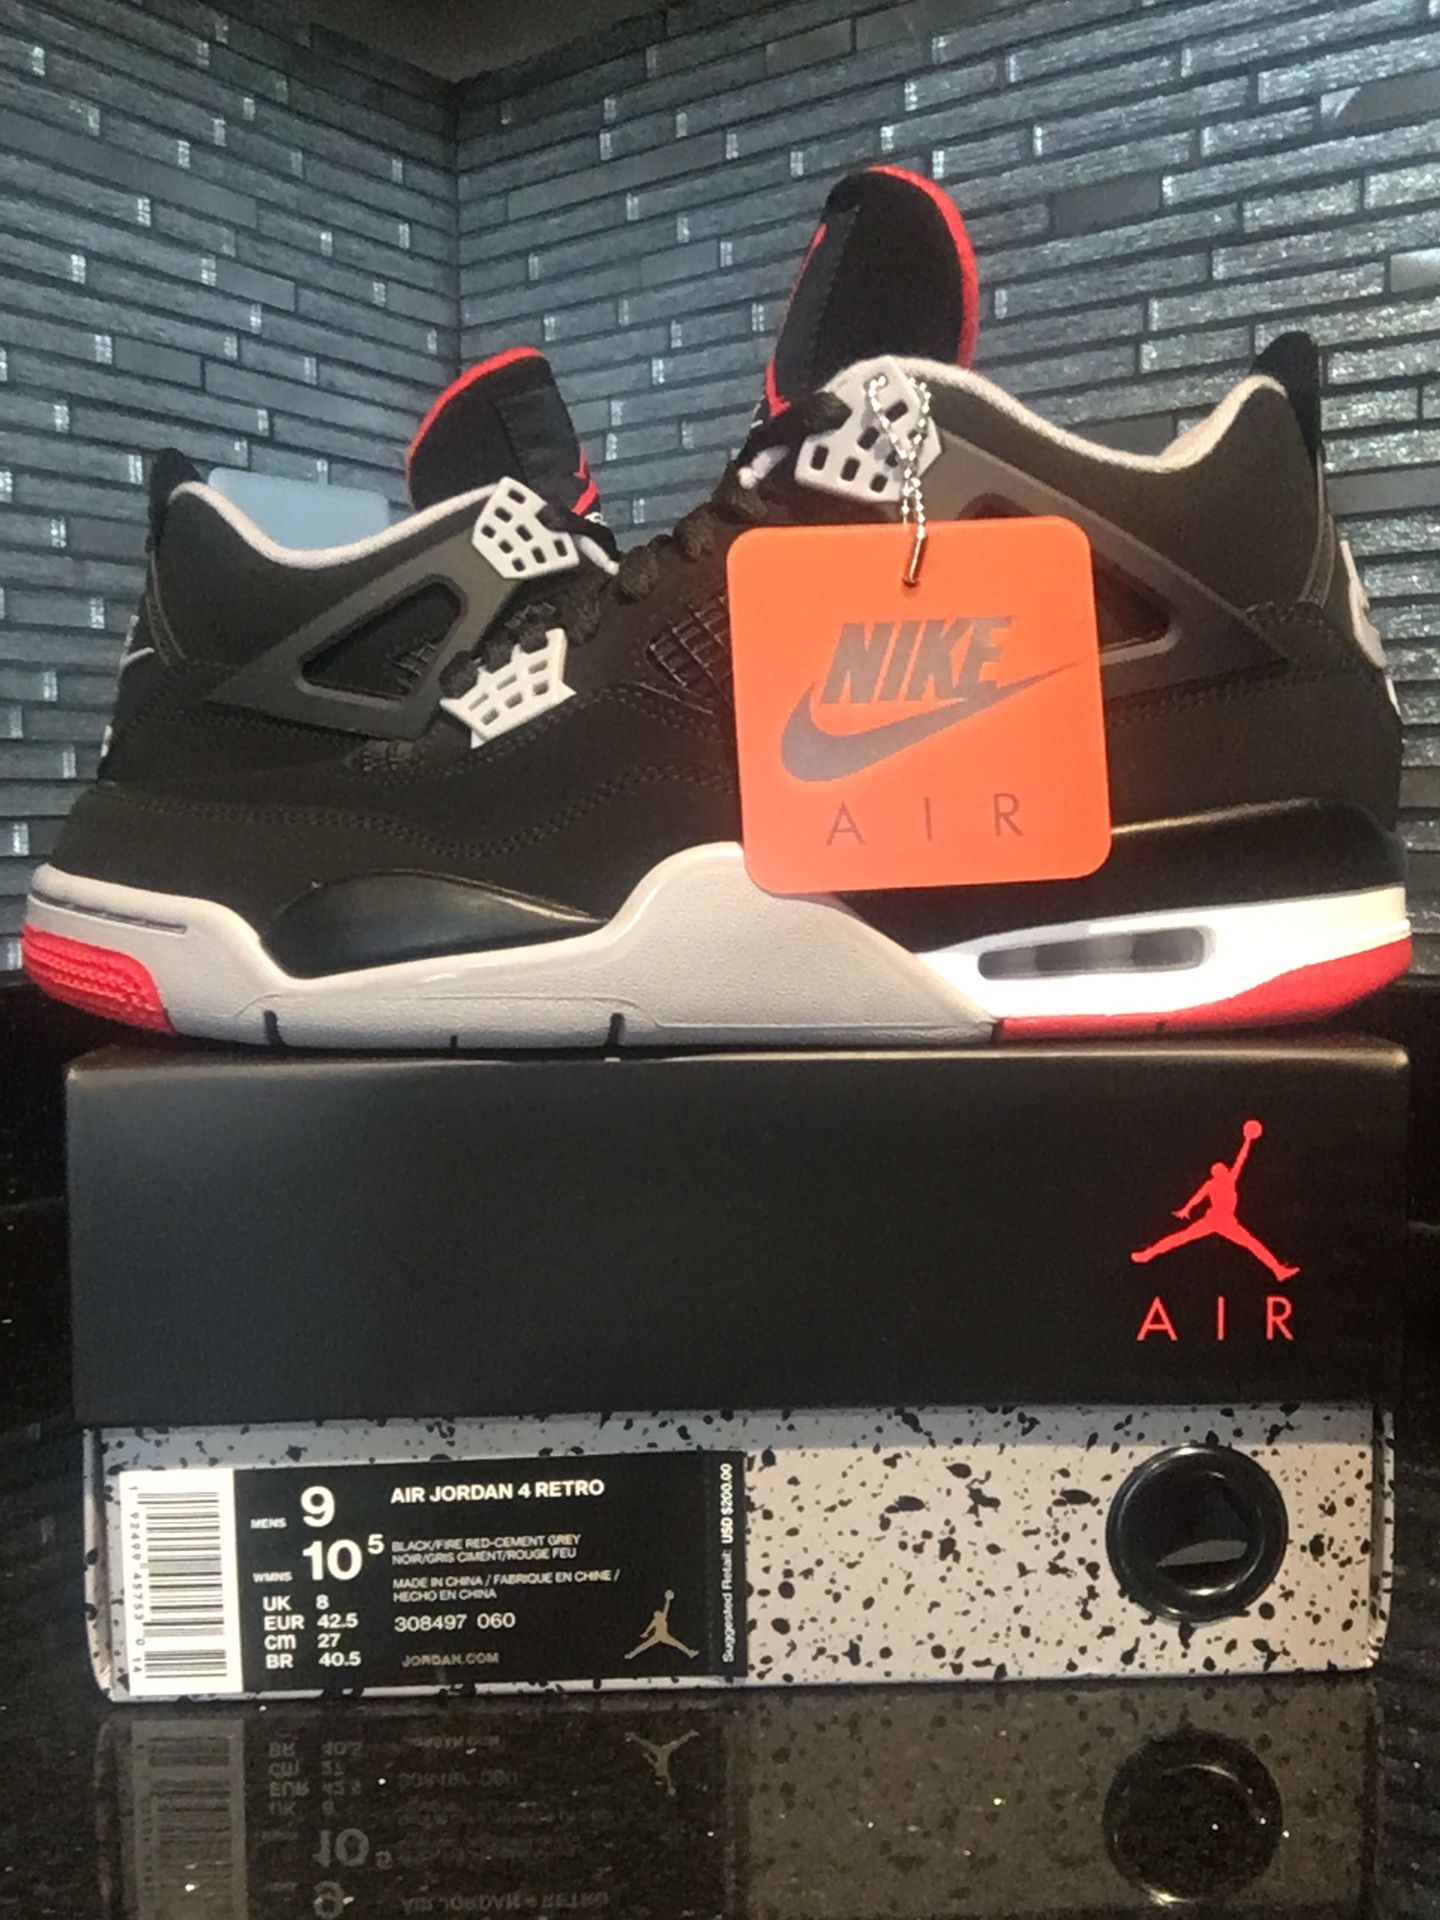 Nike Air Jordan Retro 4 size 9